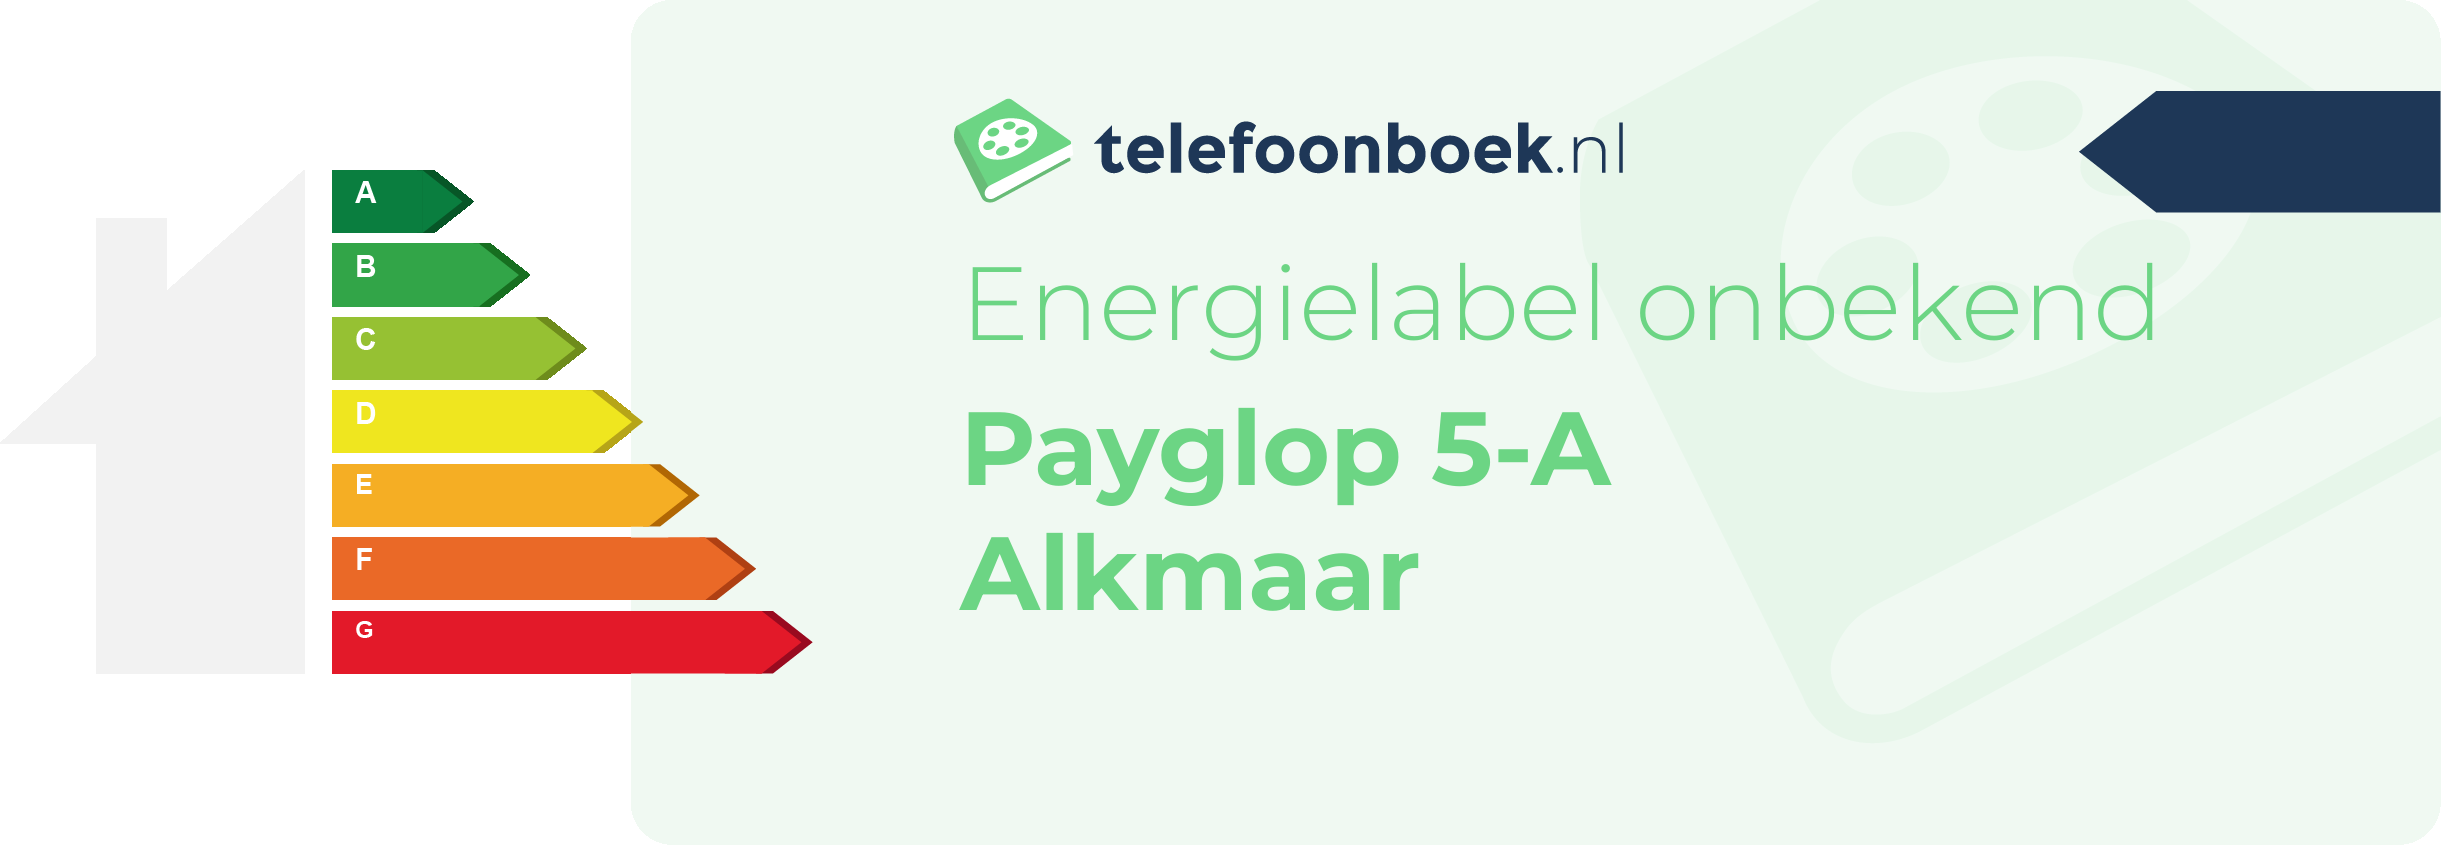 Energielabel Payglop 5-A Alkmaar